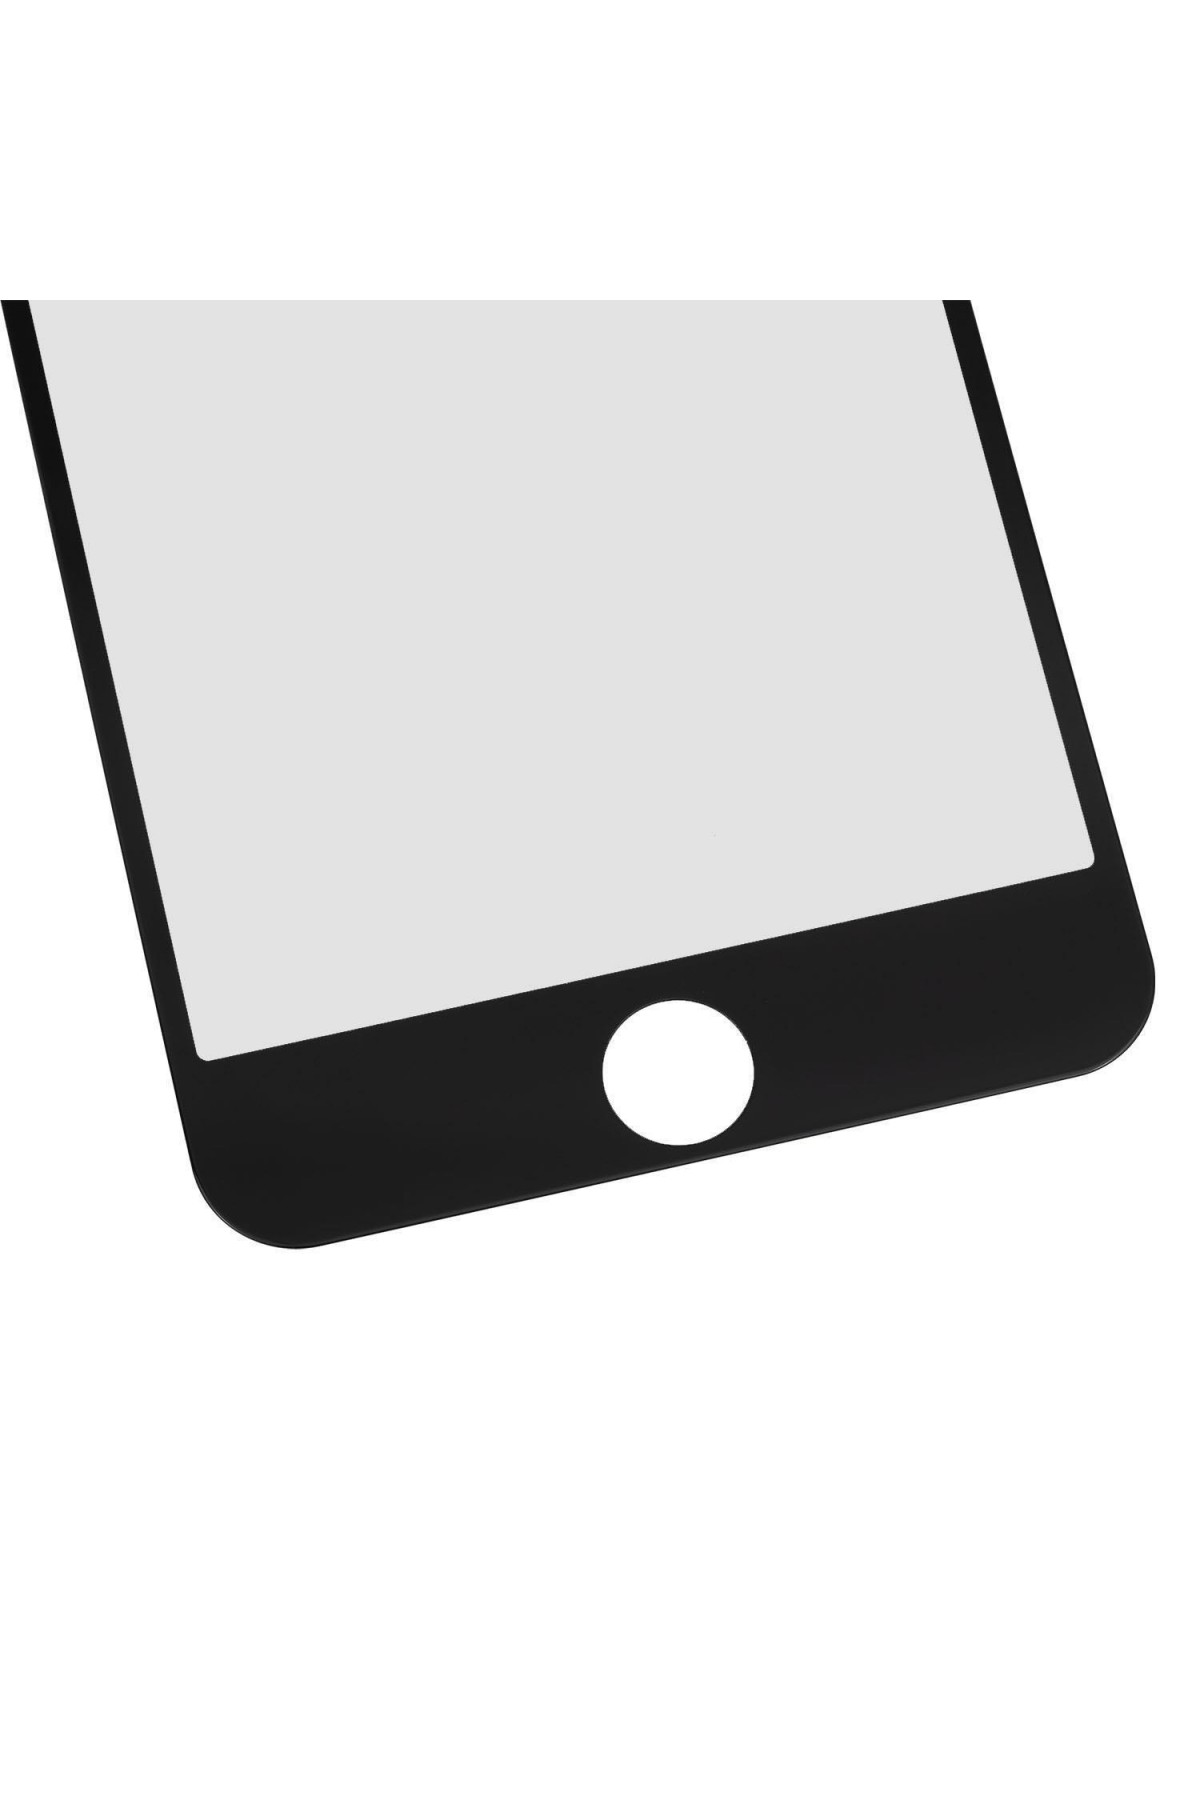 Iphone 7 Plus Gizli Hayalet Ekran Koruyucu Mat Seramik Tam Kaplama